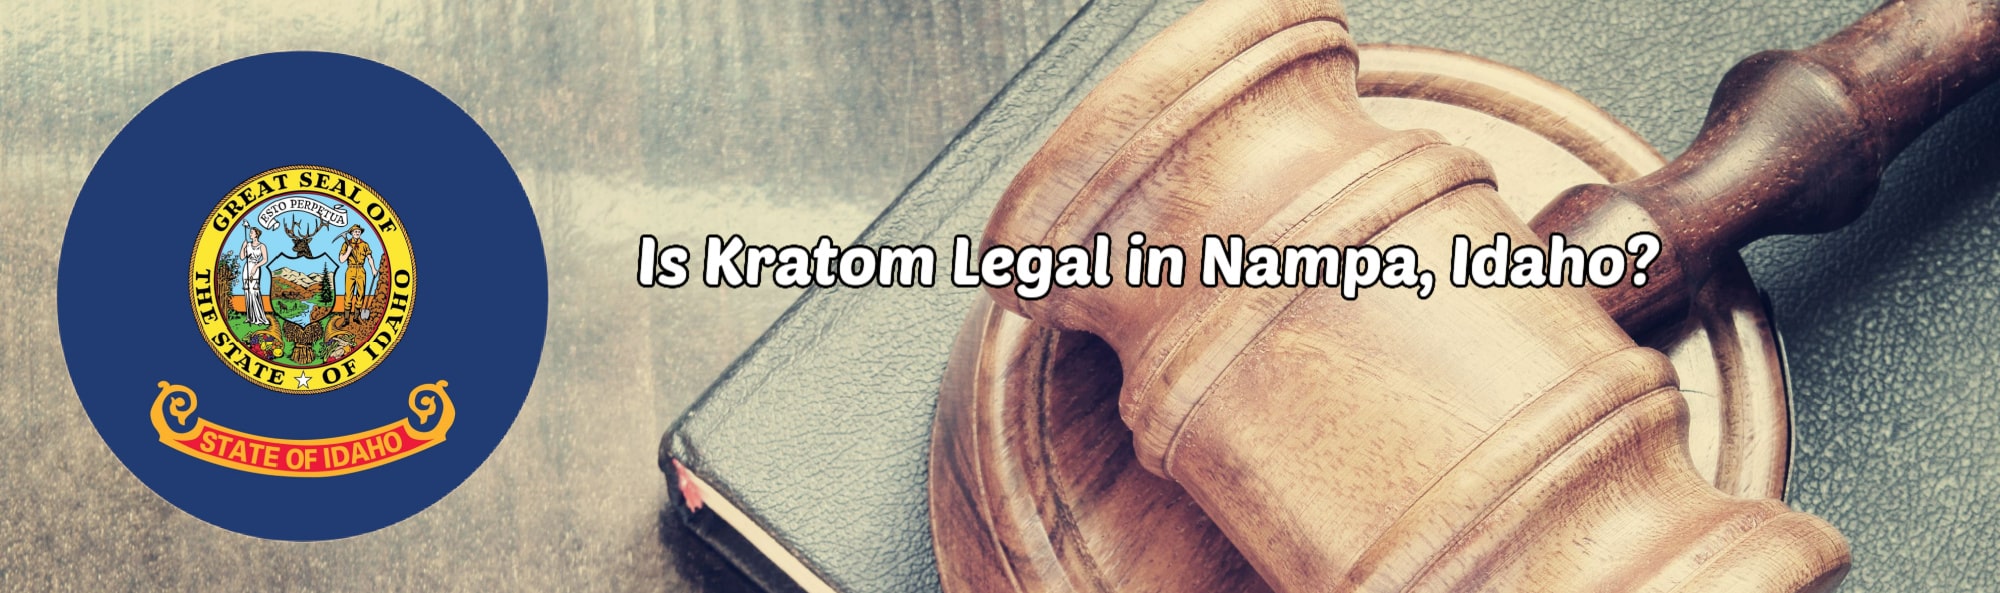 image of is kratom legal in nampa id